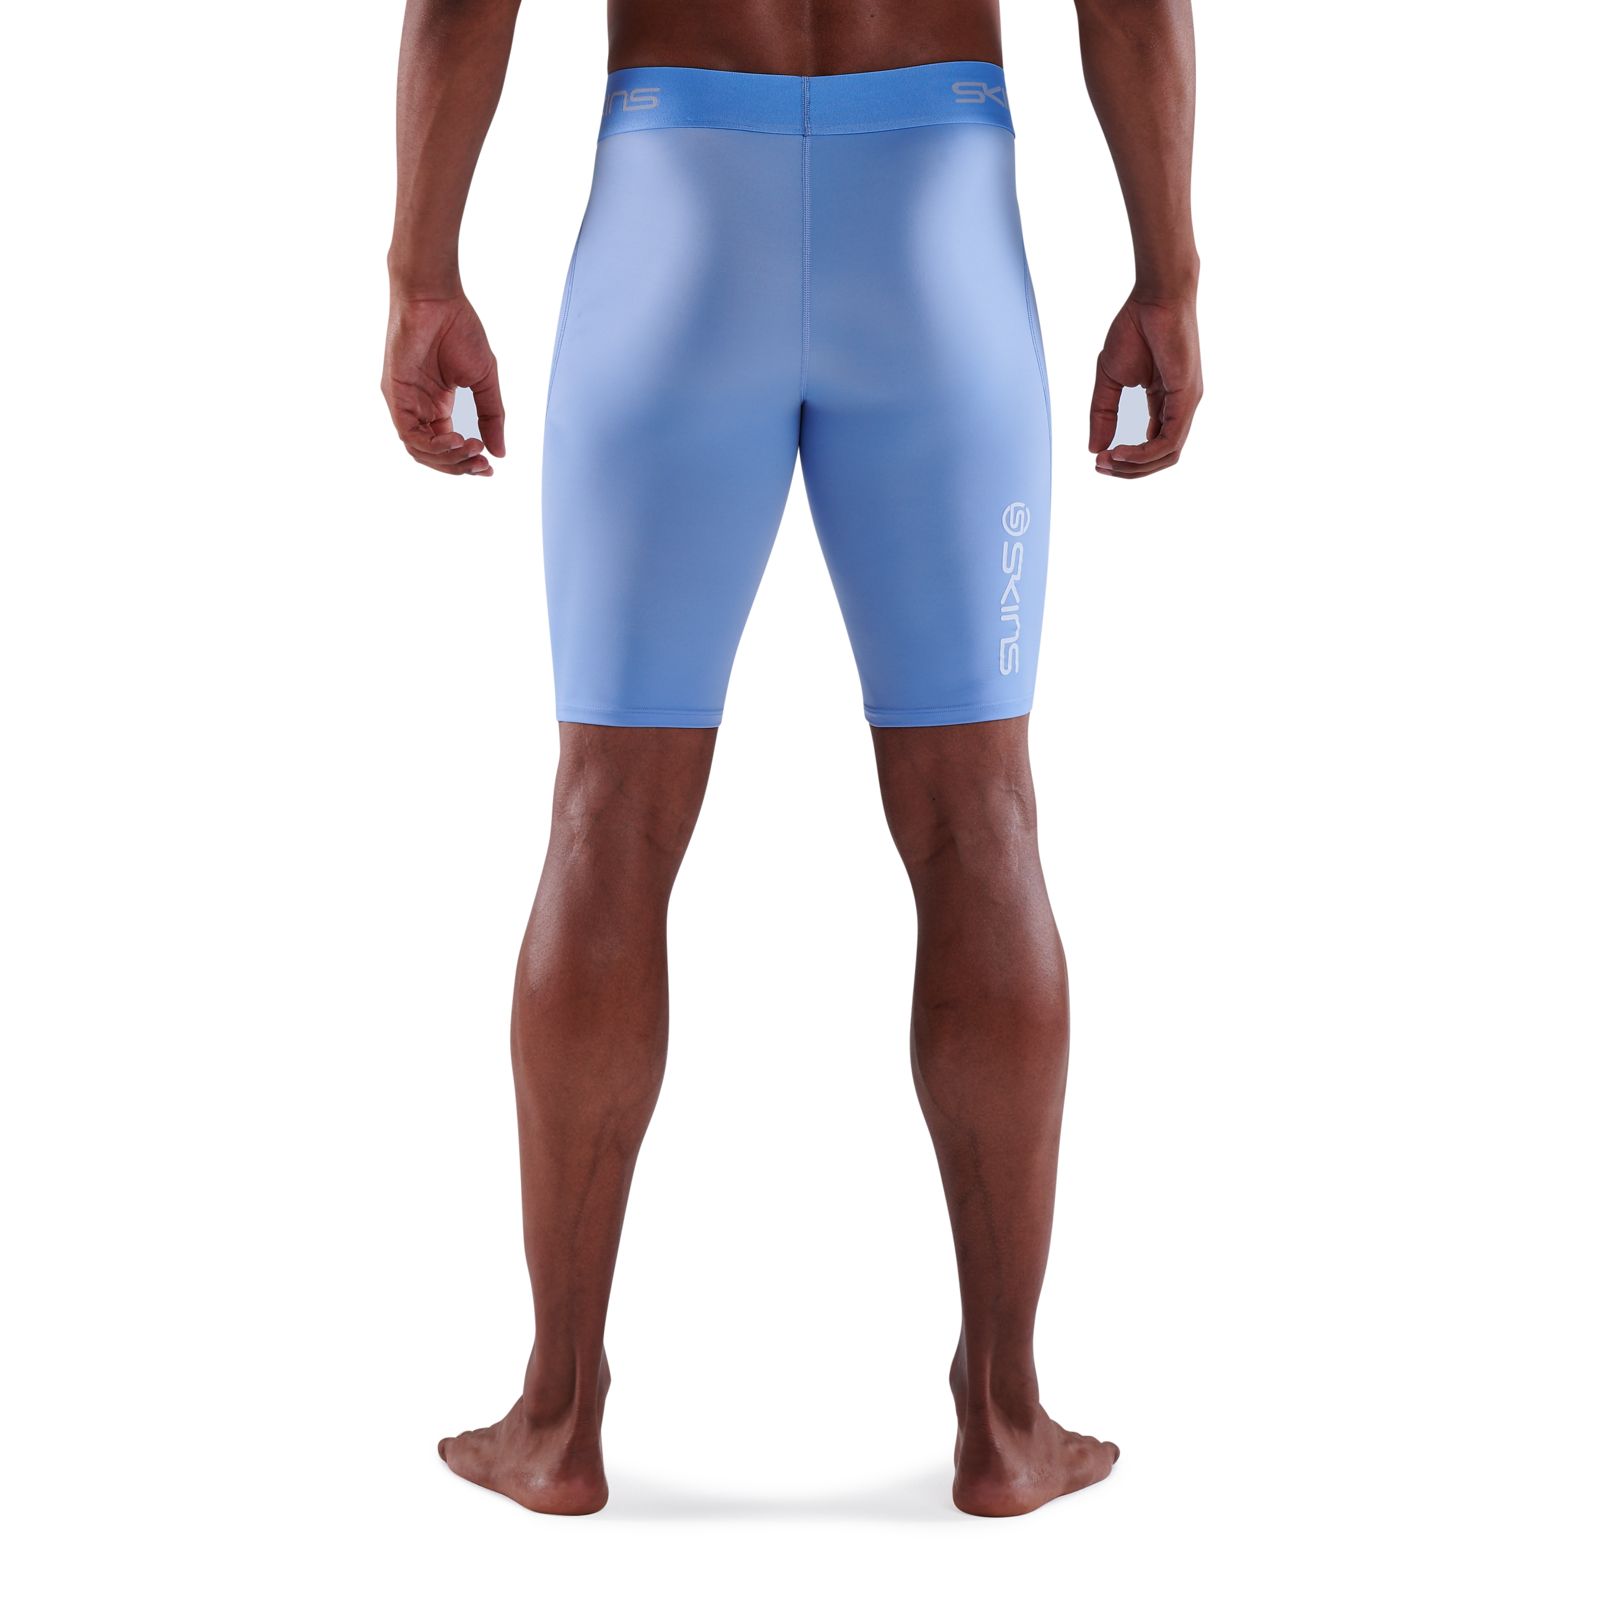 Skins Series-1 Mens Compression Half Tights (Bright Blue), GREAT BARGAIN